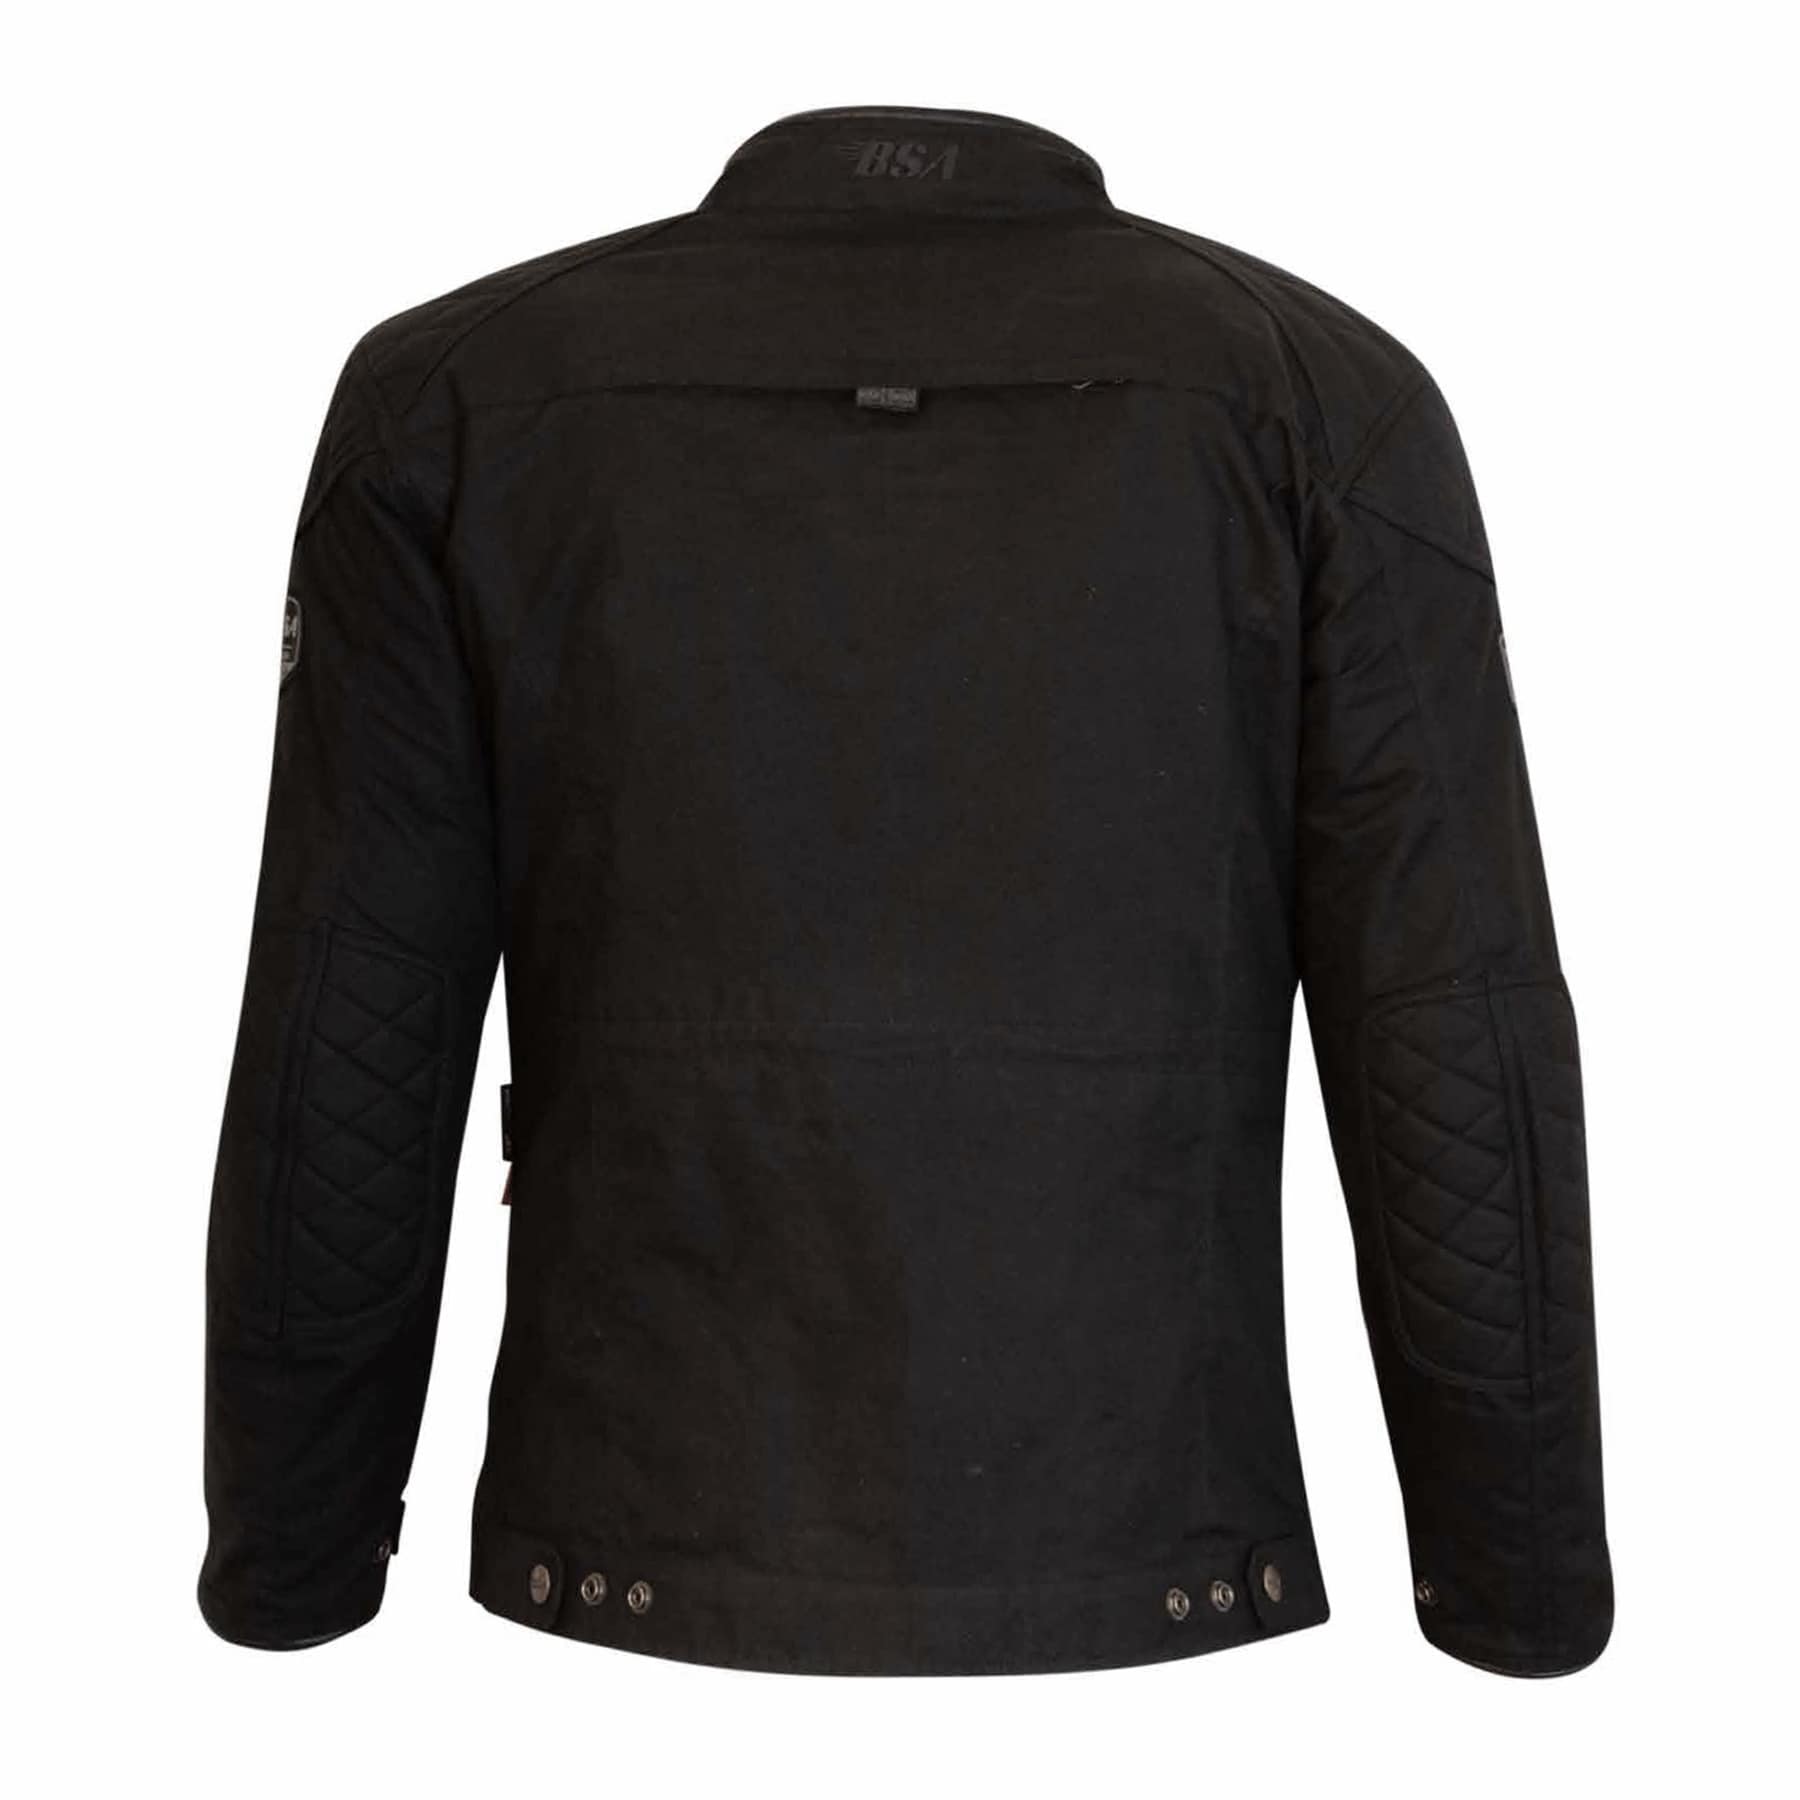 BSA x Merlin Empire wax jacket in black